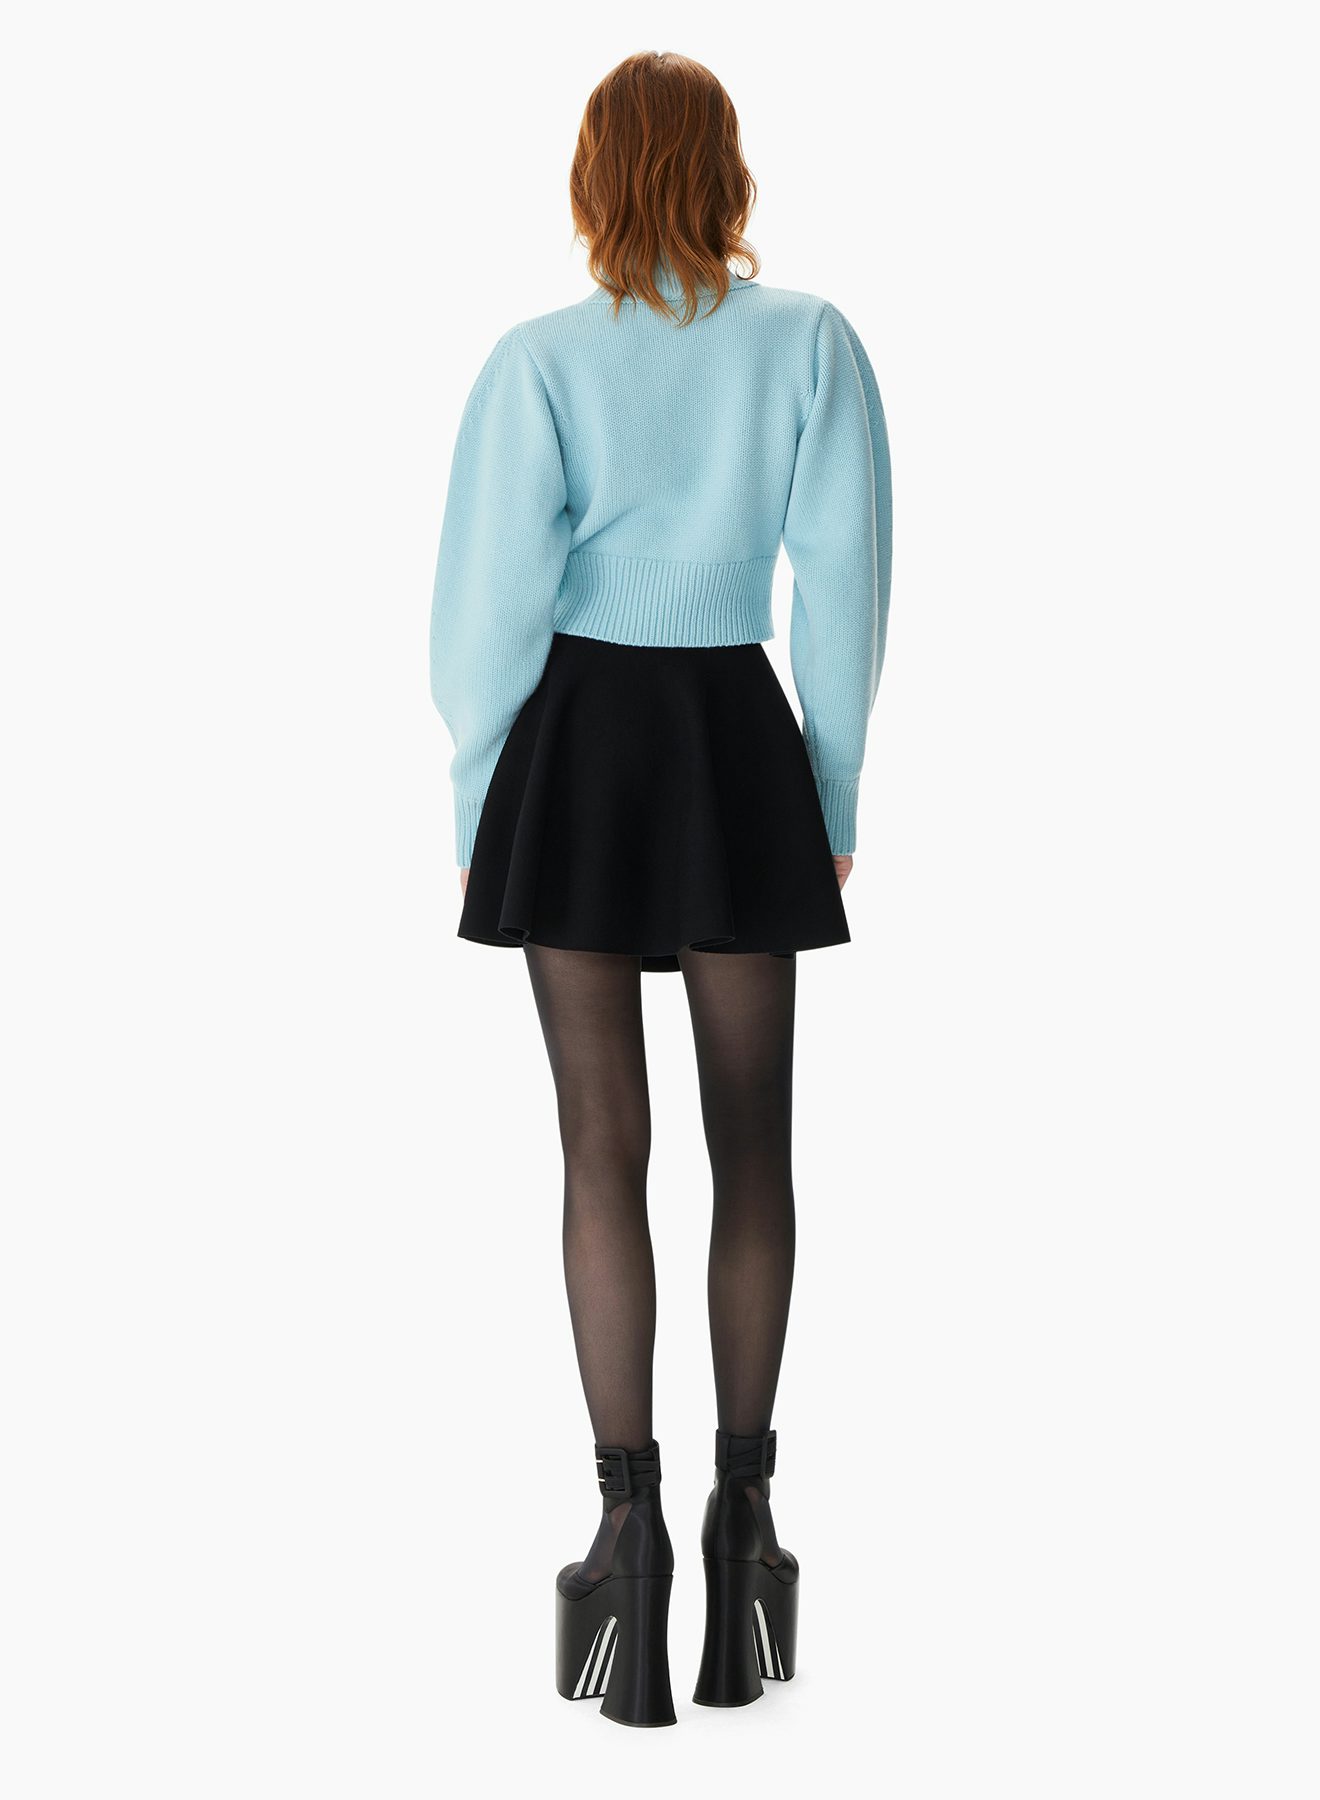 Mini Wool-Blend Skater Skirt Black - Nina Ricci 